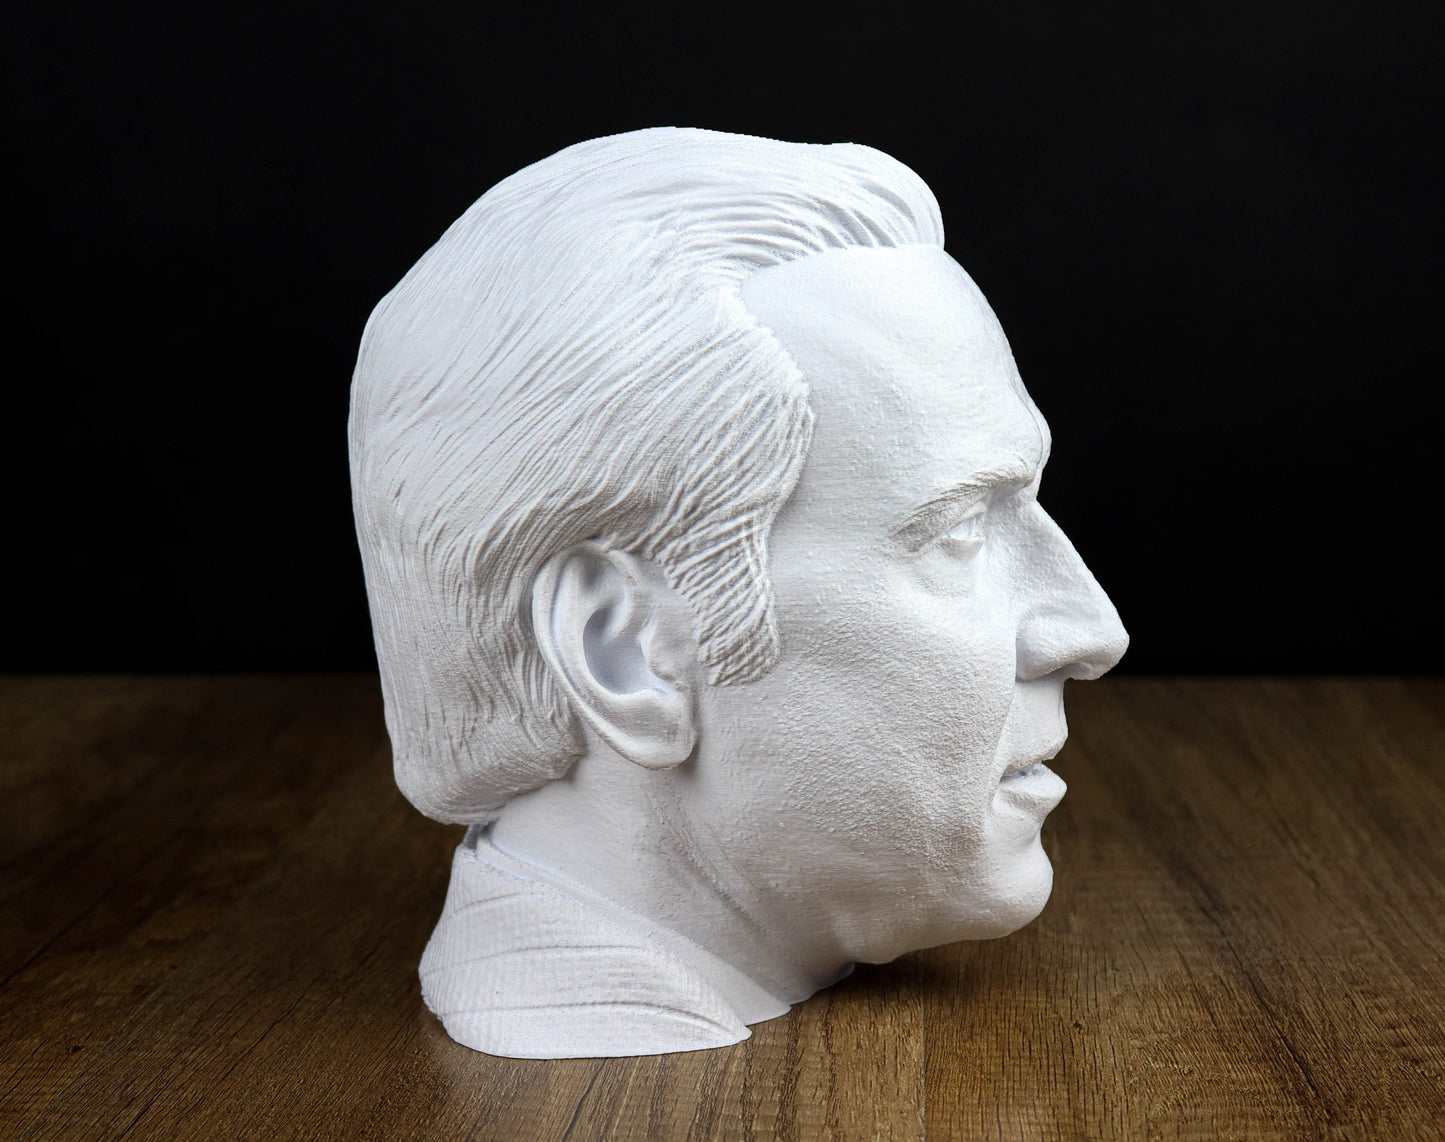 Nicholas Cage Headphone Holder, Headset Stand, Bust, Sculpture, Decoration